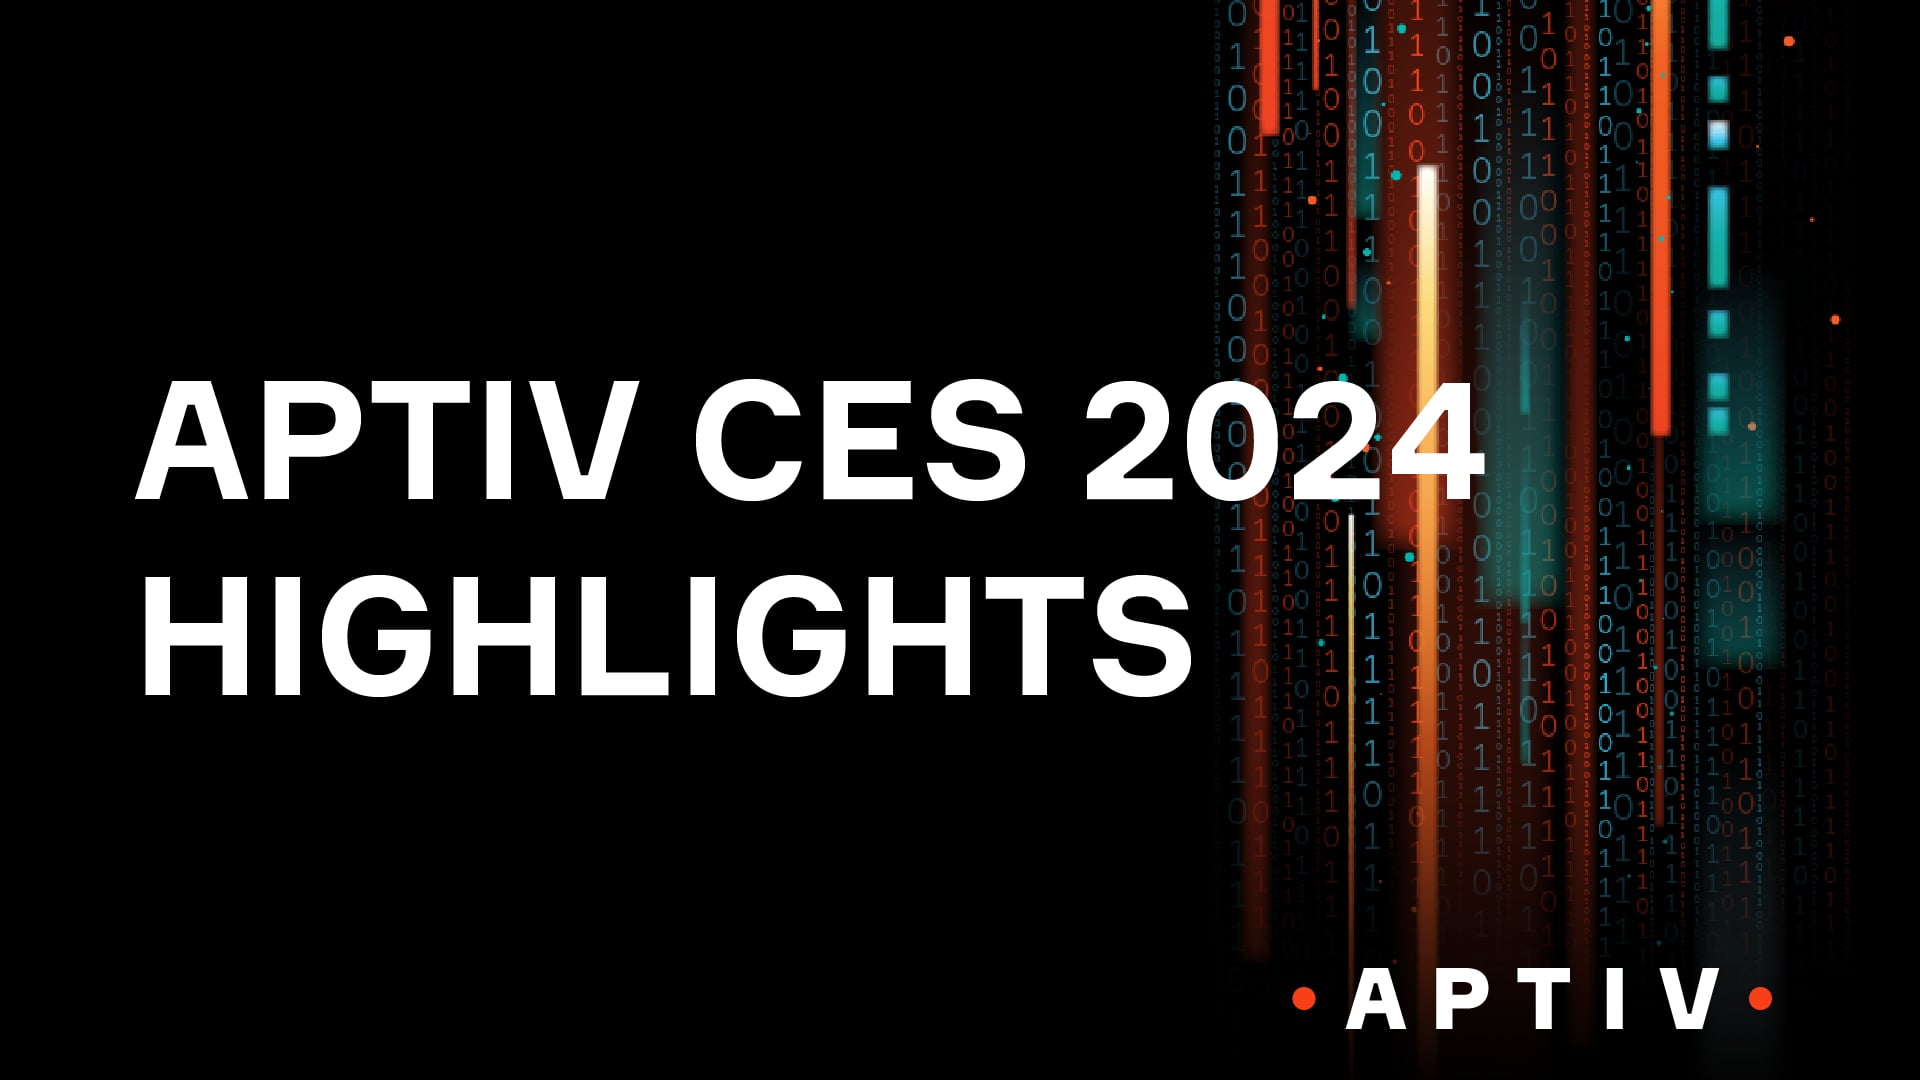 Aptiv CES 2024 Highlights